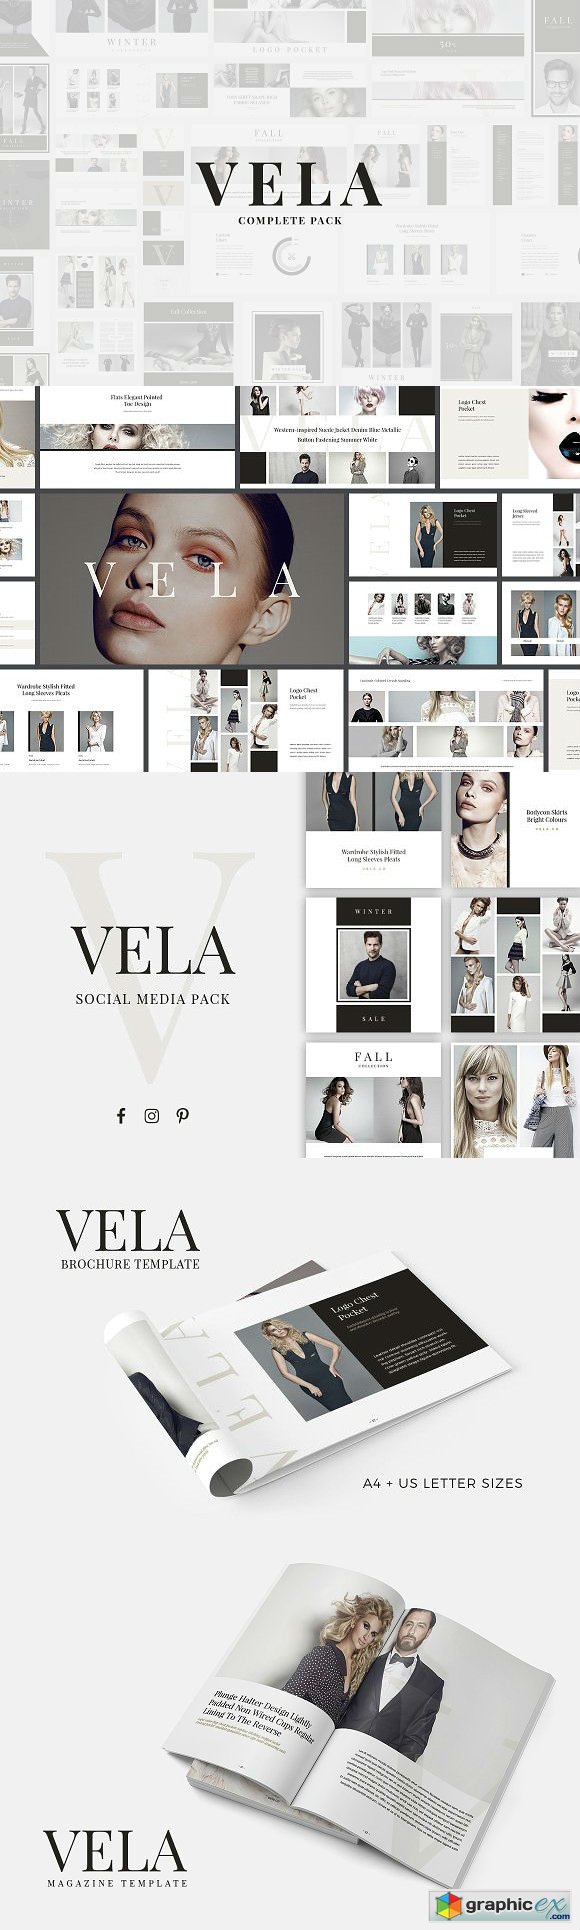 Vela Complete Pack